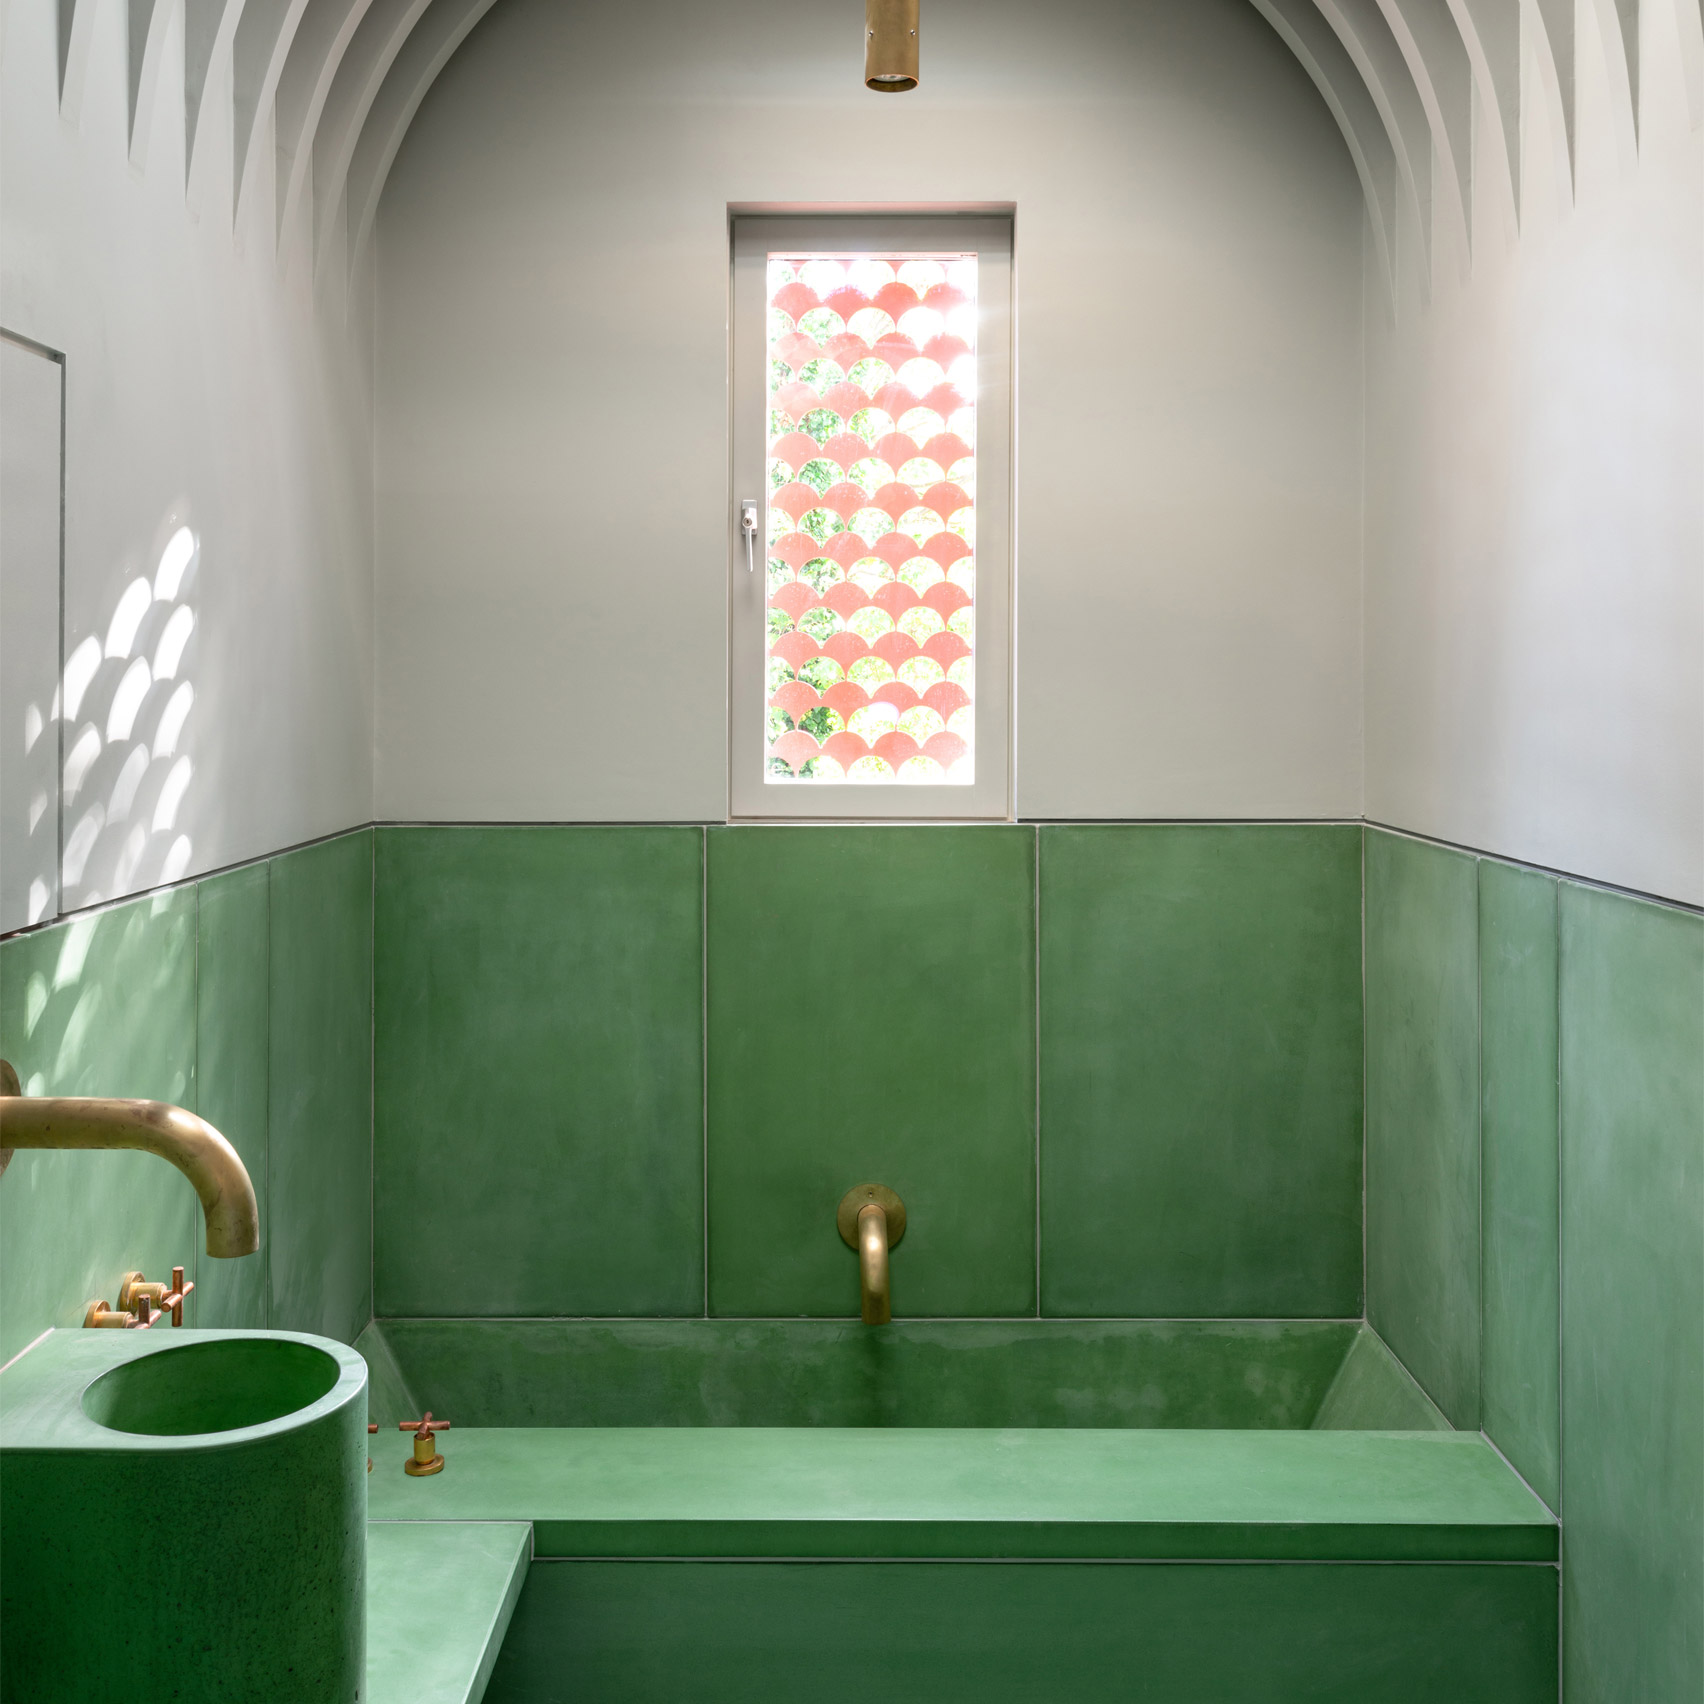 A green and white bathroom made from precast concrete